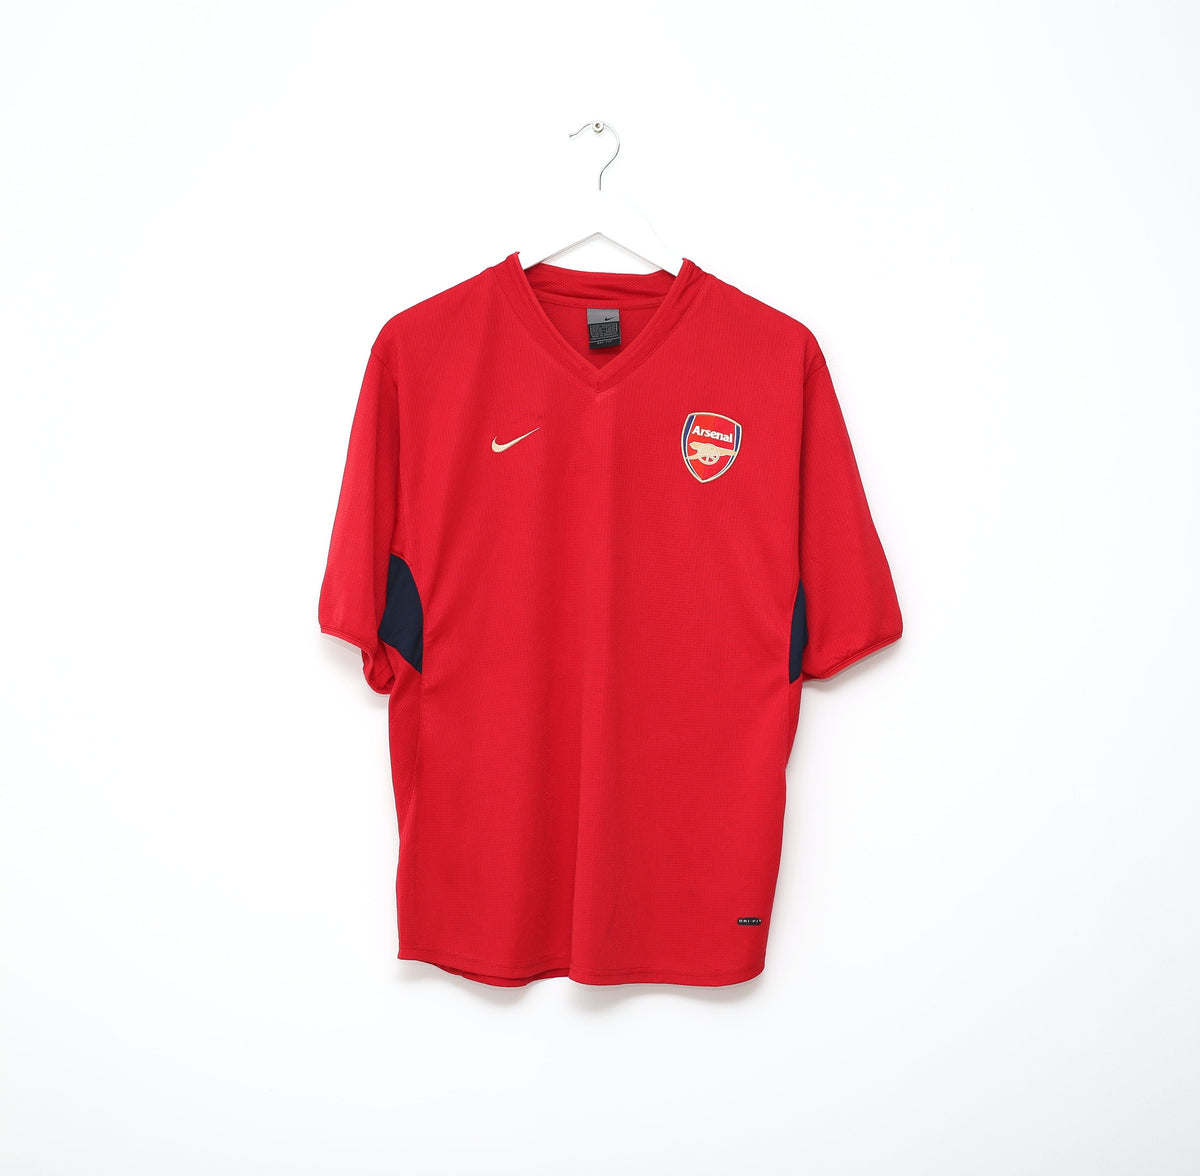 2003/04 ARSENAL Vintage Nike Football Training Shirt (M)